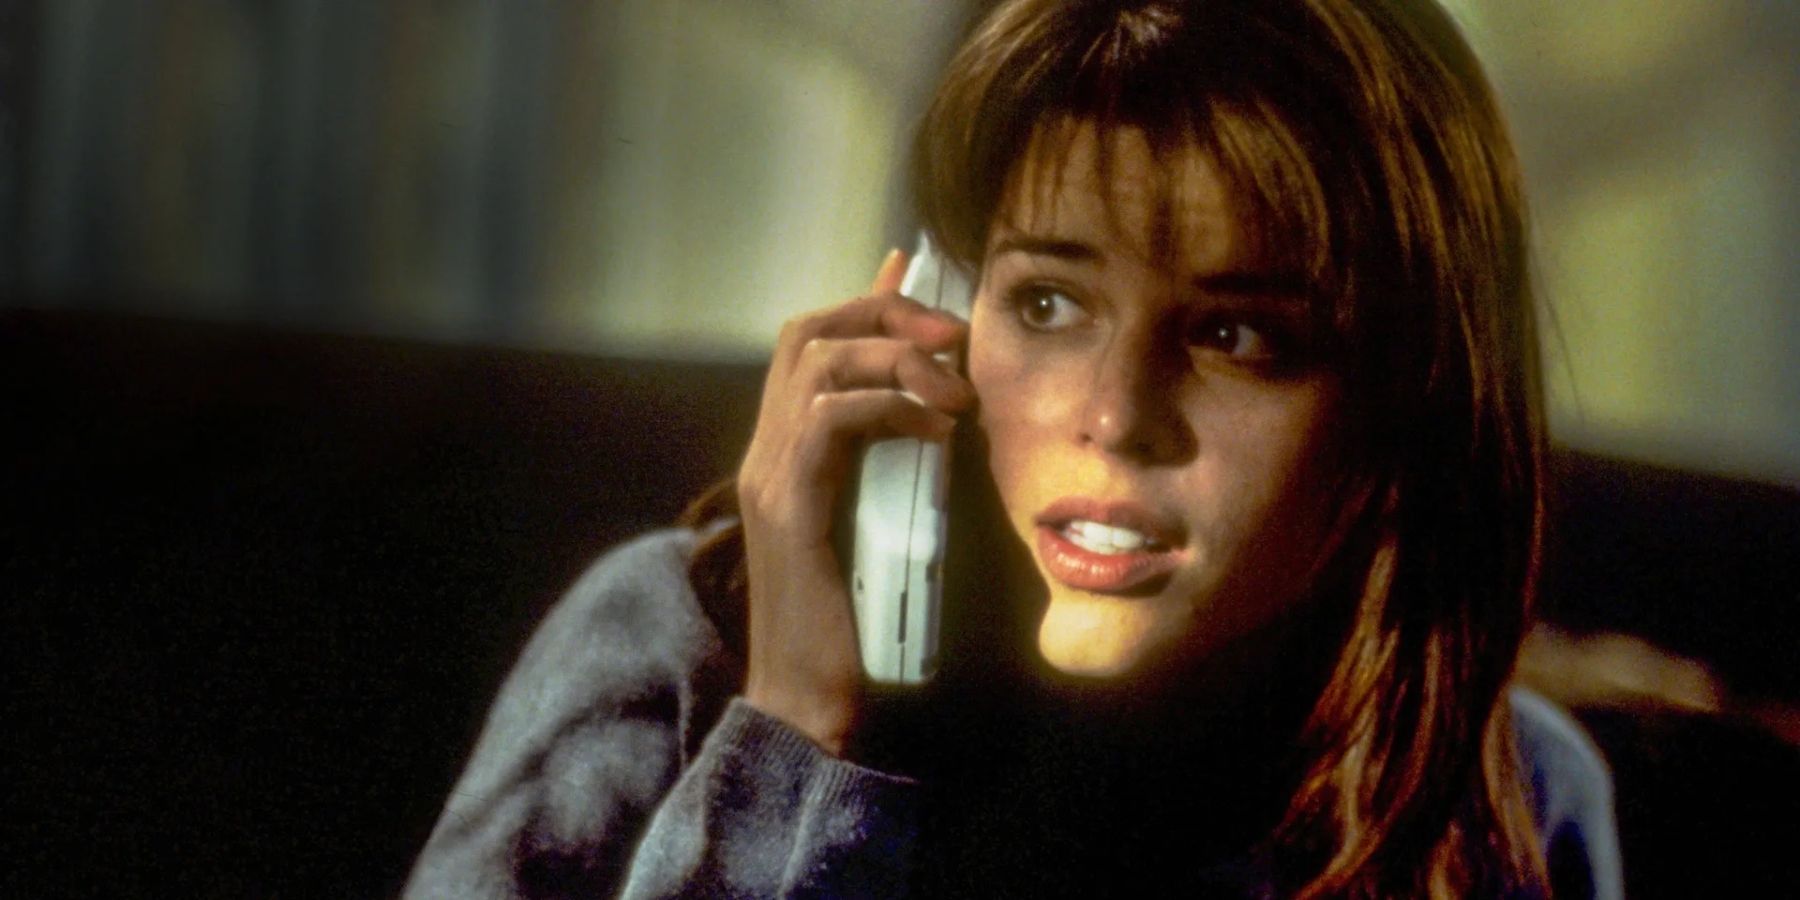 Sidney Prescott on the phone in Scream